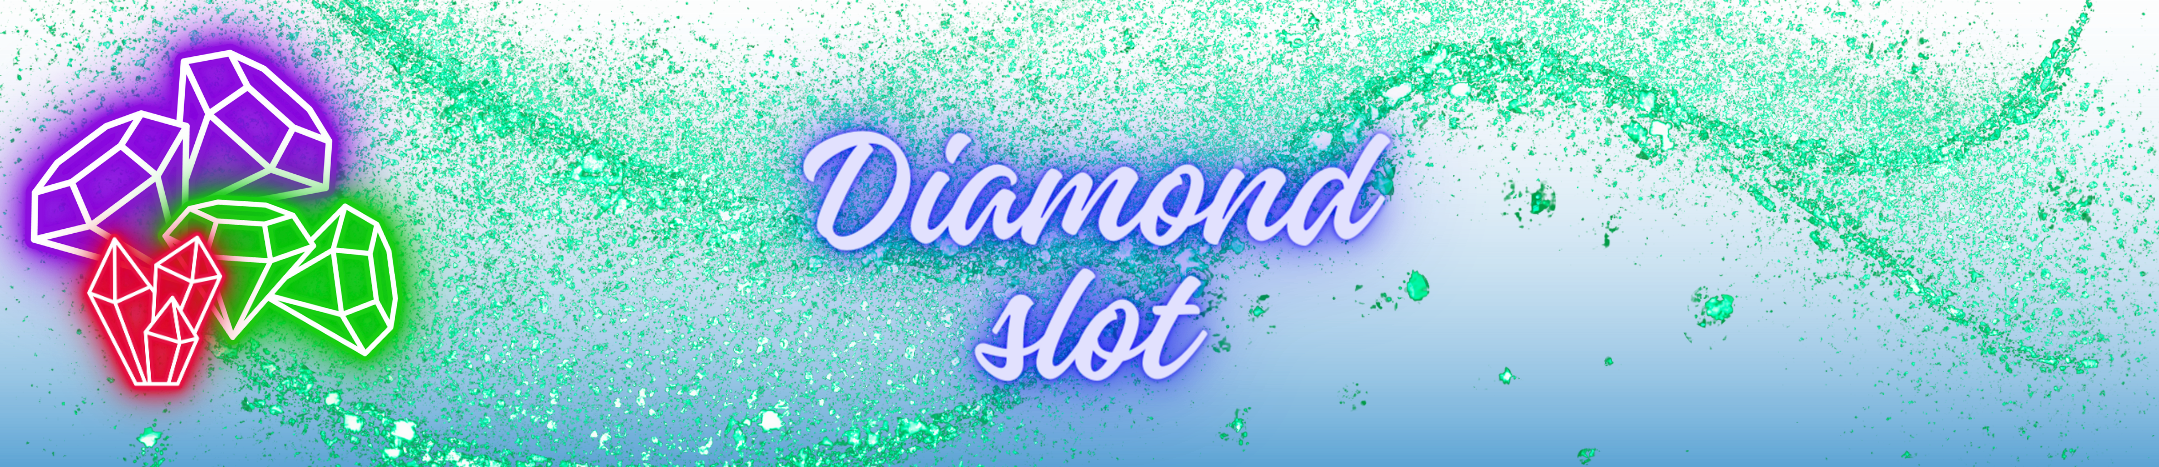 diamond slot